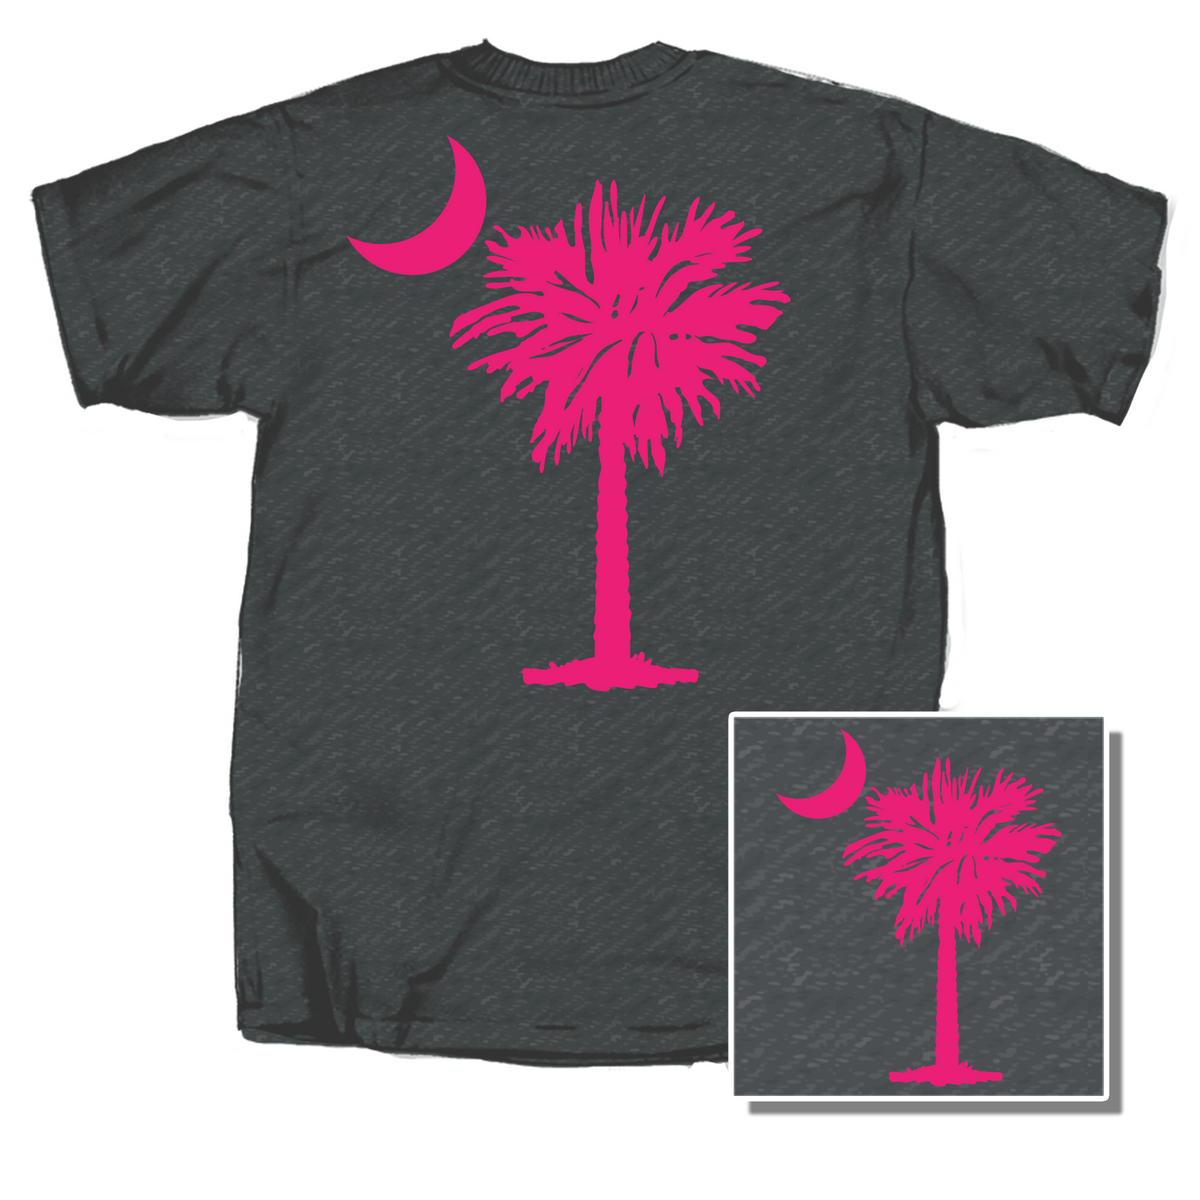 Palm Tree Short Sleeve T-Shirt